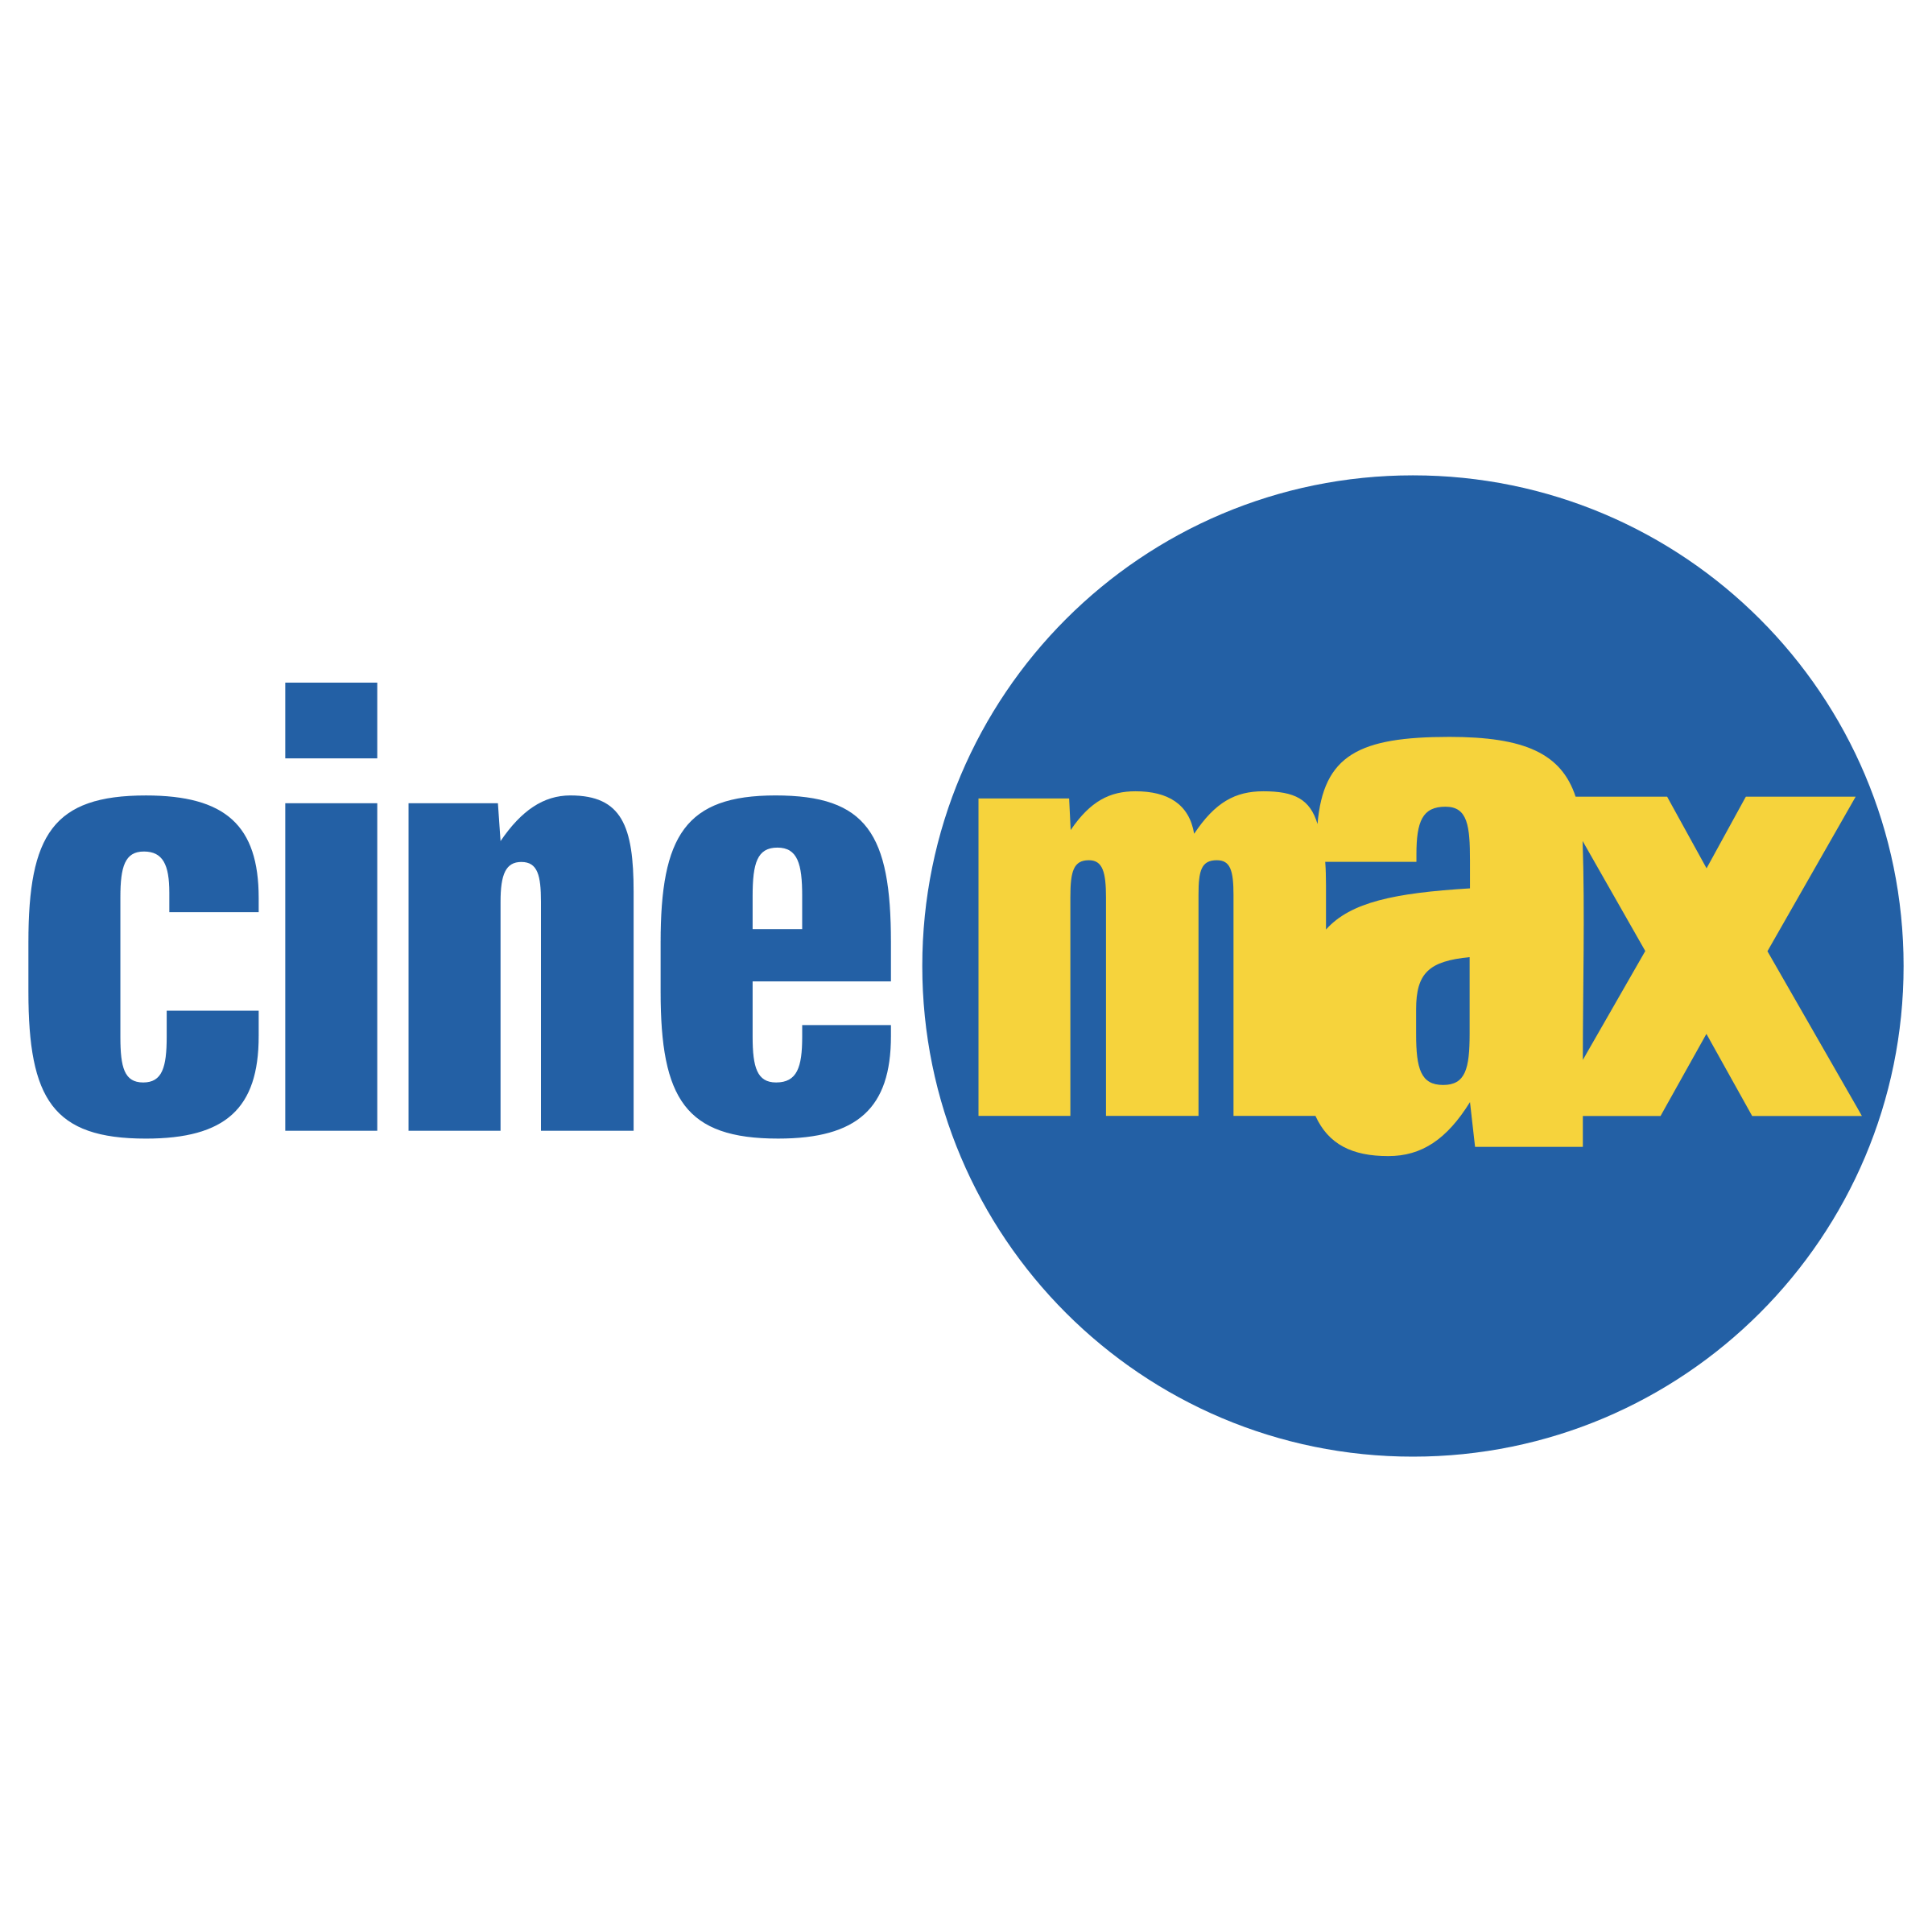 Cinemax Logo - Cinemax Logo PNG Transparent & SVG Vector - Freebie Supply